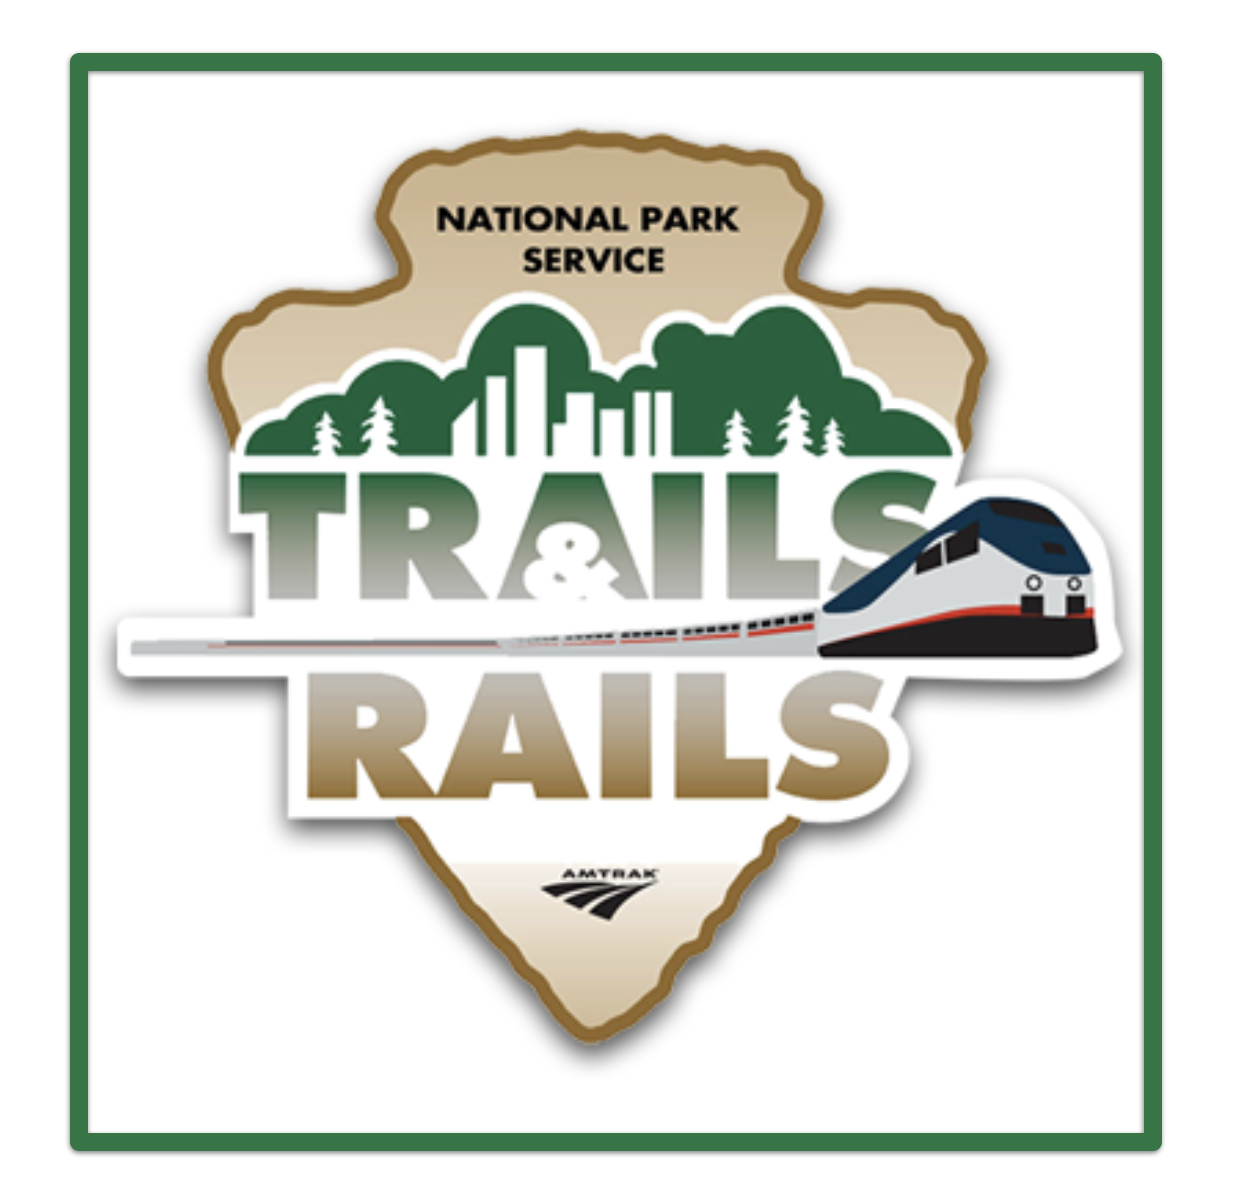 Trails and Rails -Anza Trail